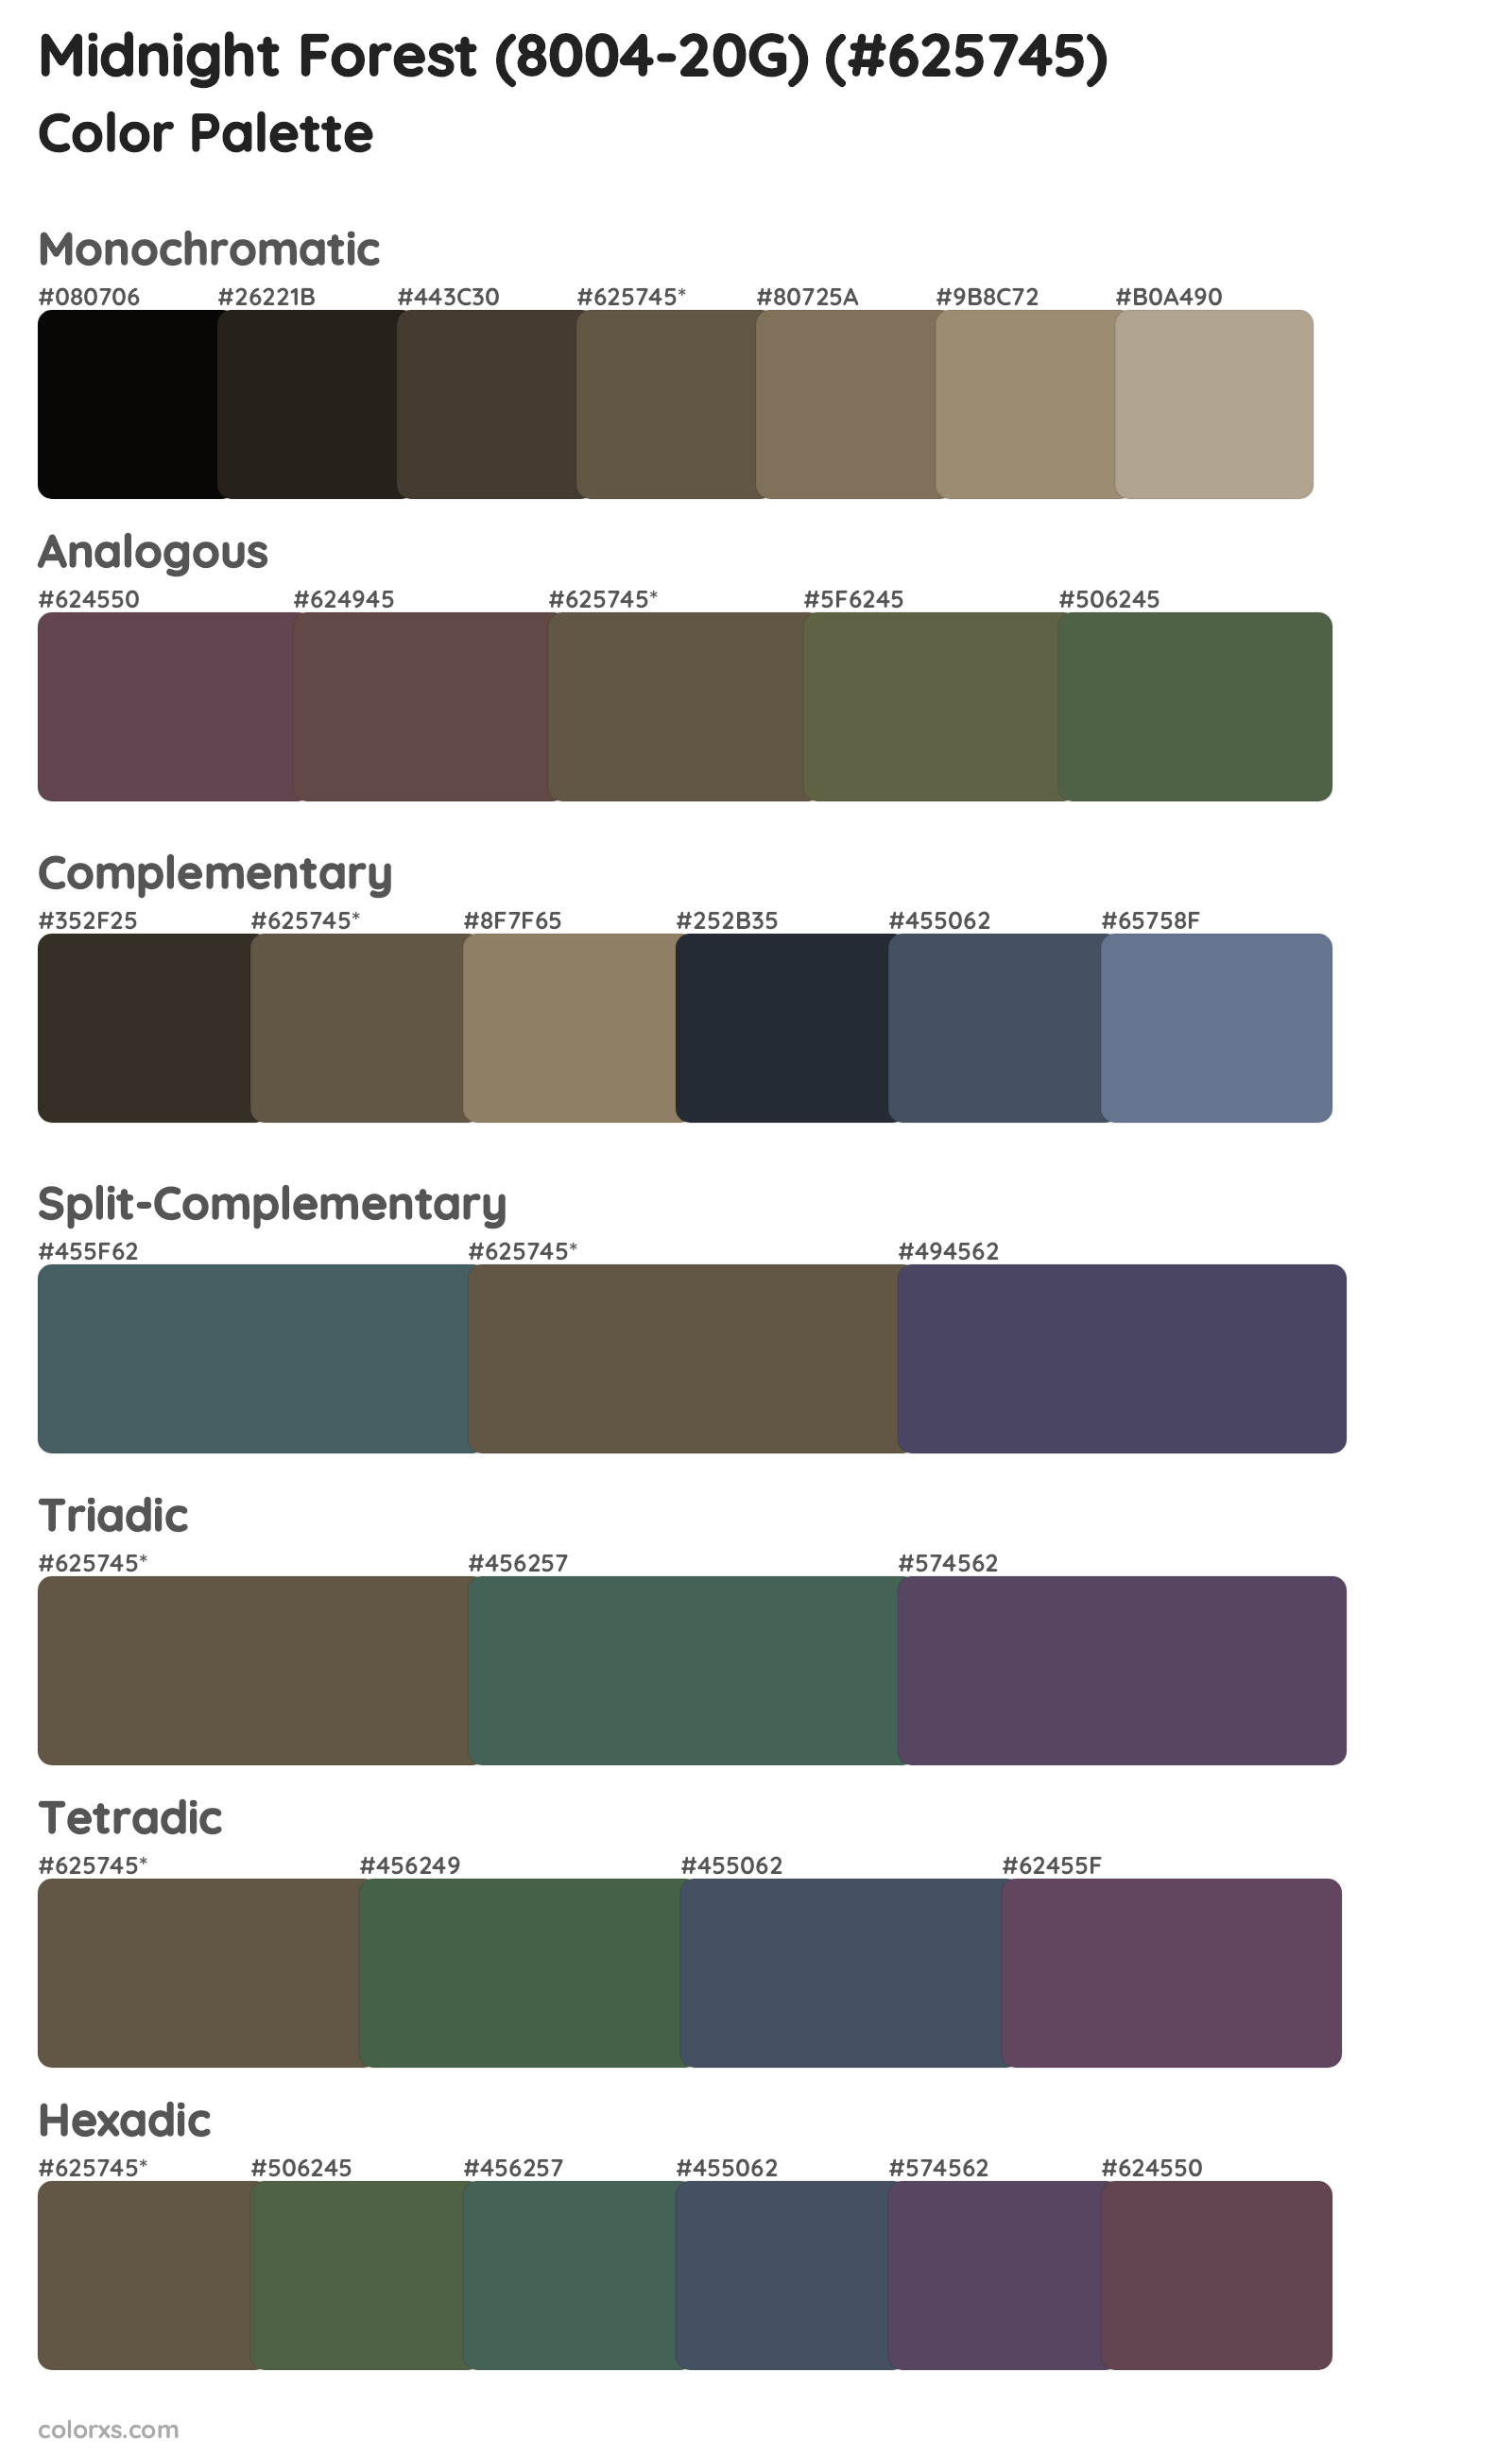 Midnight Forest (8004-20G) Color Scheme Palettes